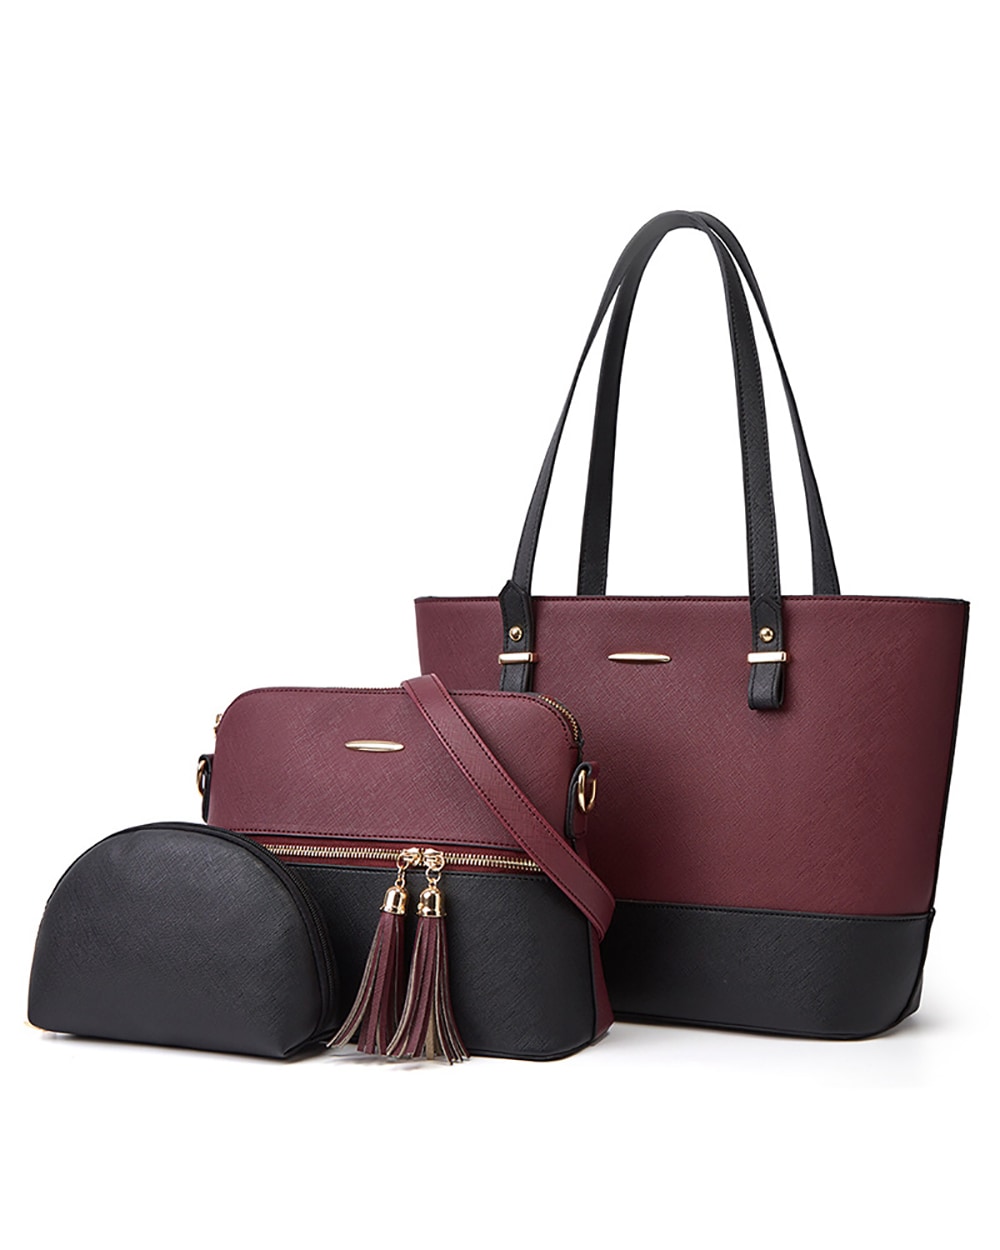 2 tone black burgundy ladies handbag set